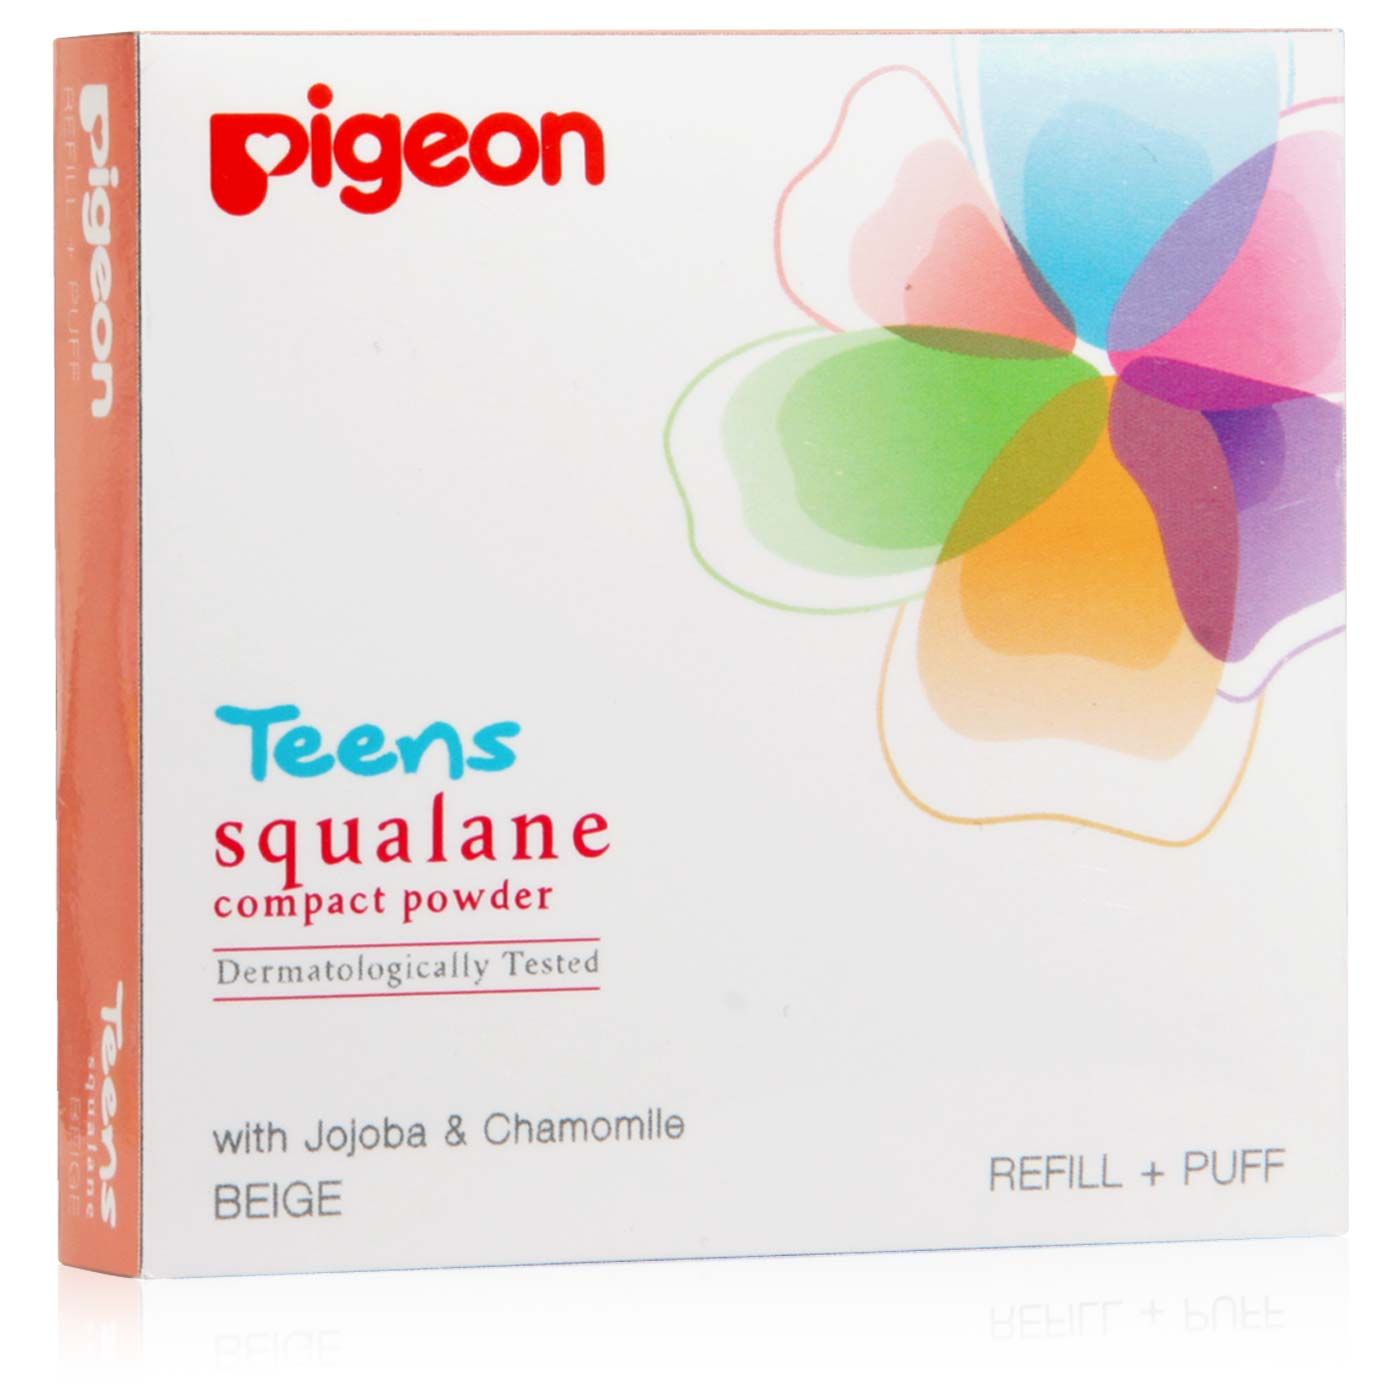 Pigeon Refill Compact Powder Squalane Beige 14g - 4